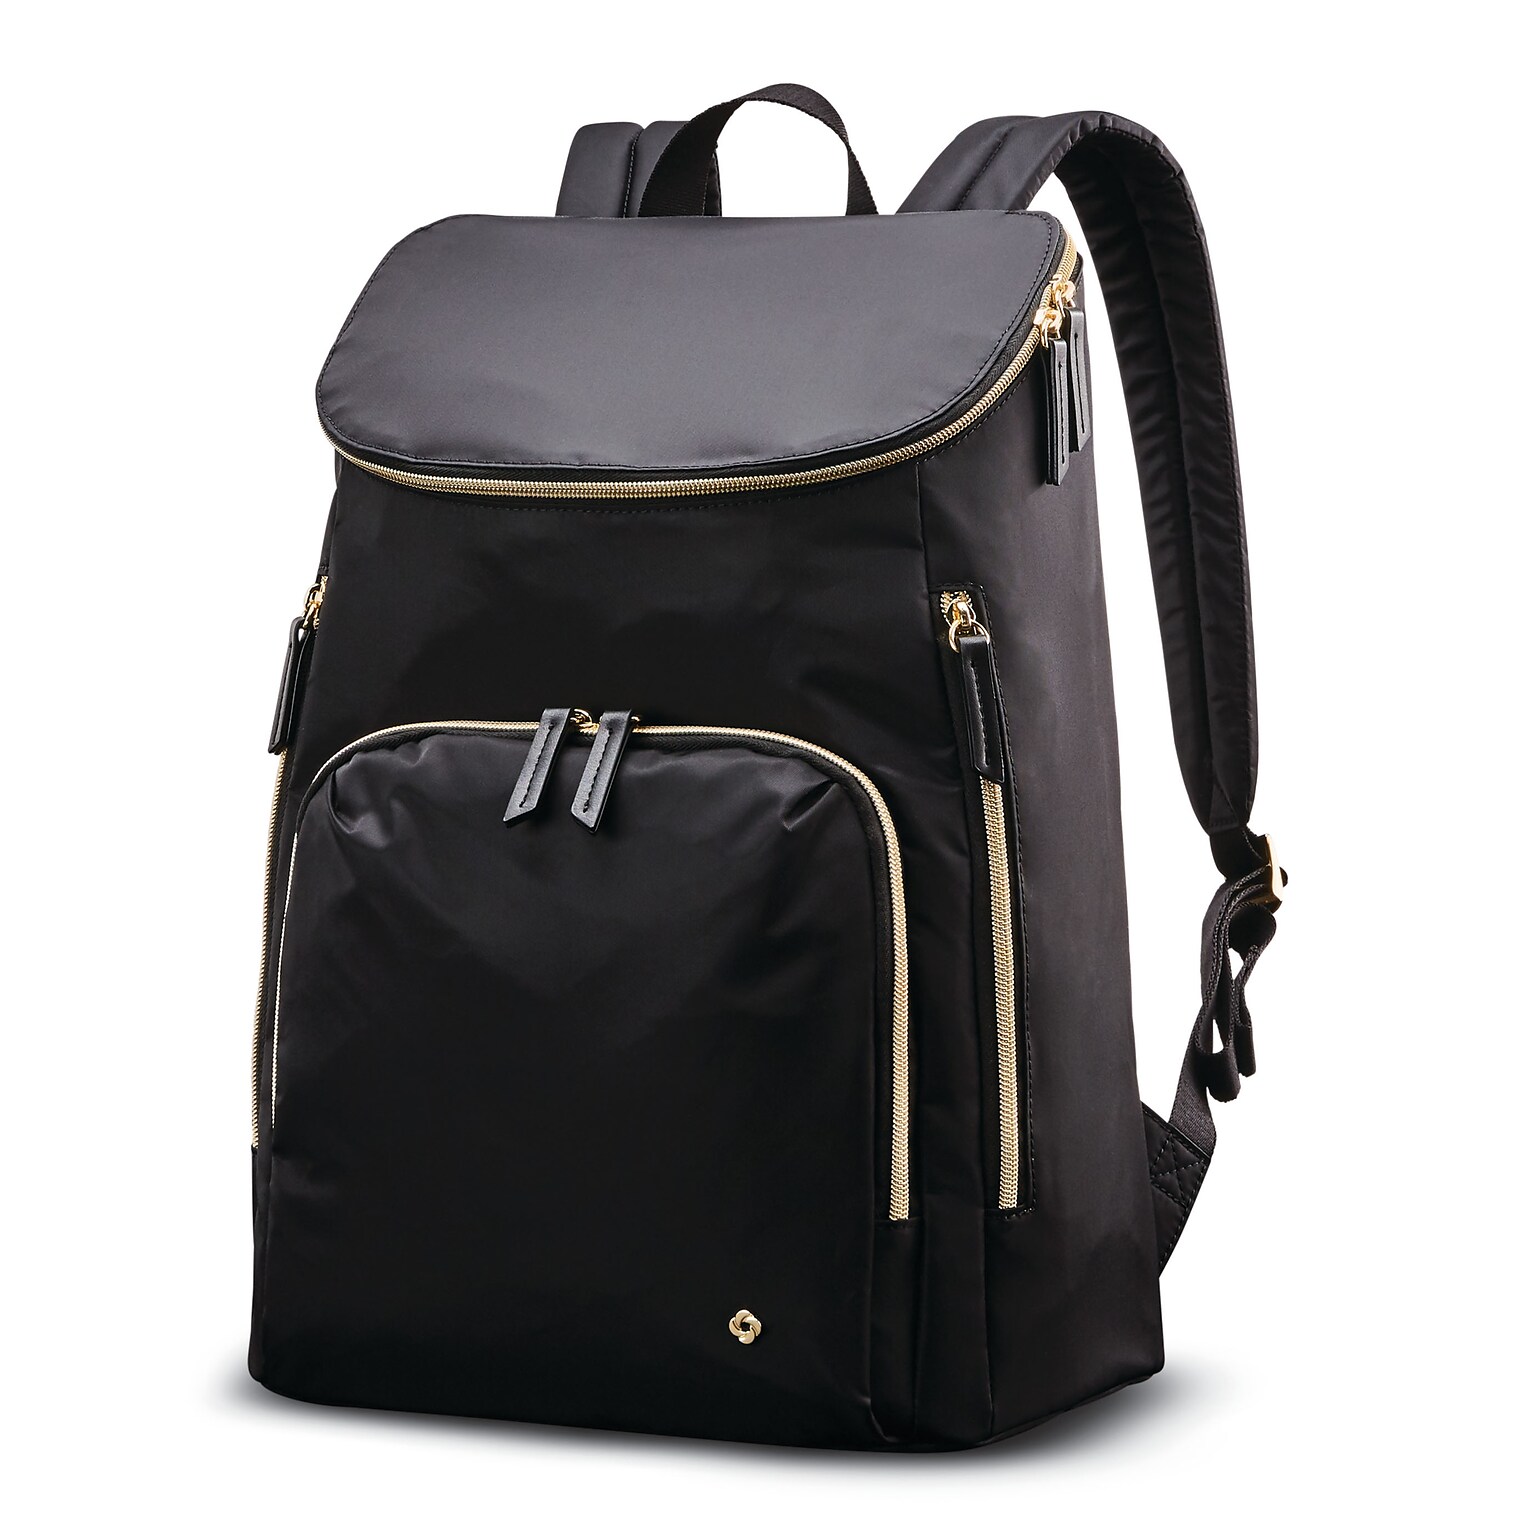 Samsonite Laptop Backpack, Solid, Black (128172-1041)